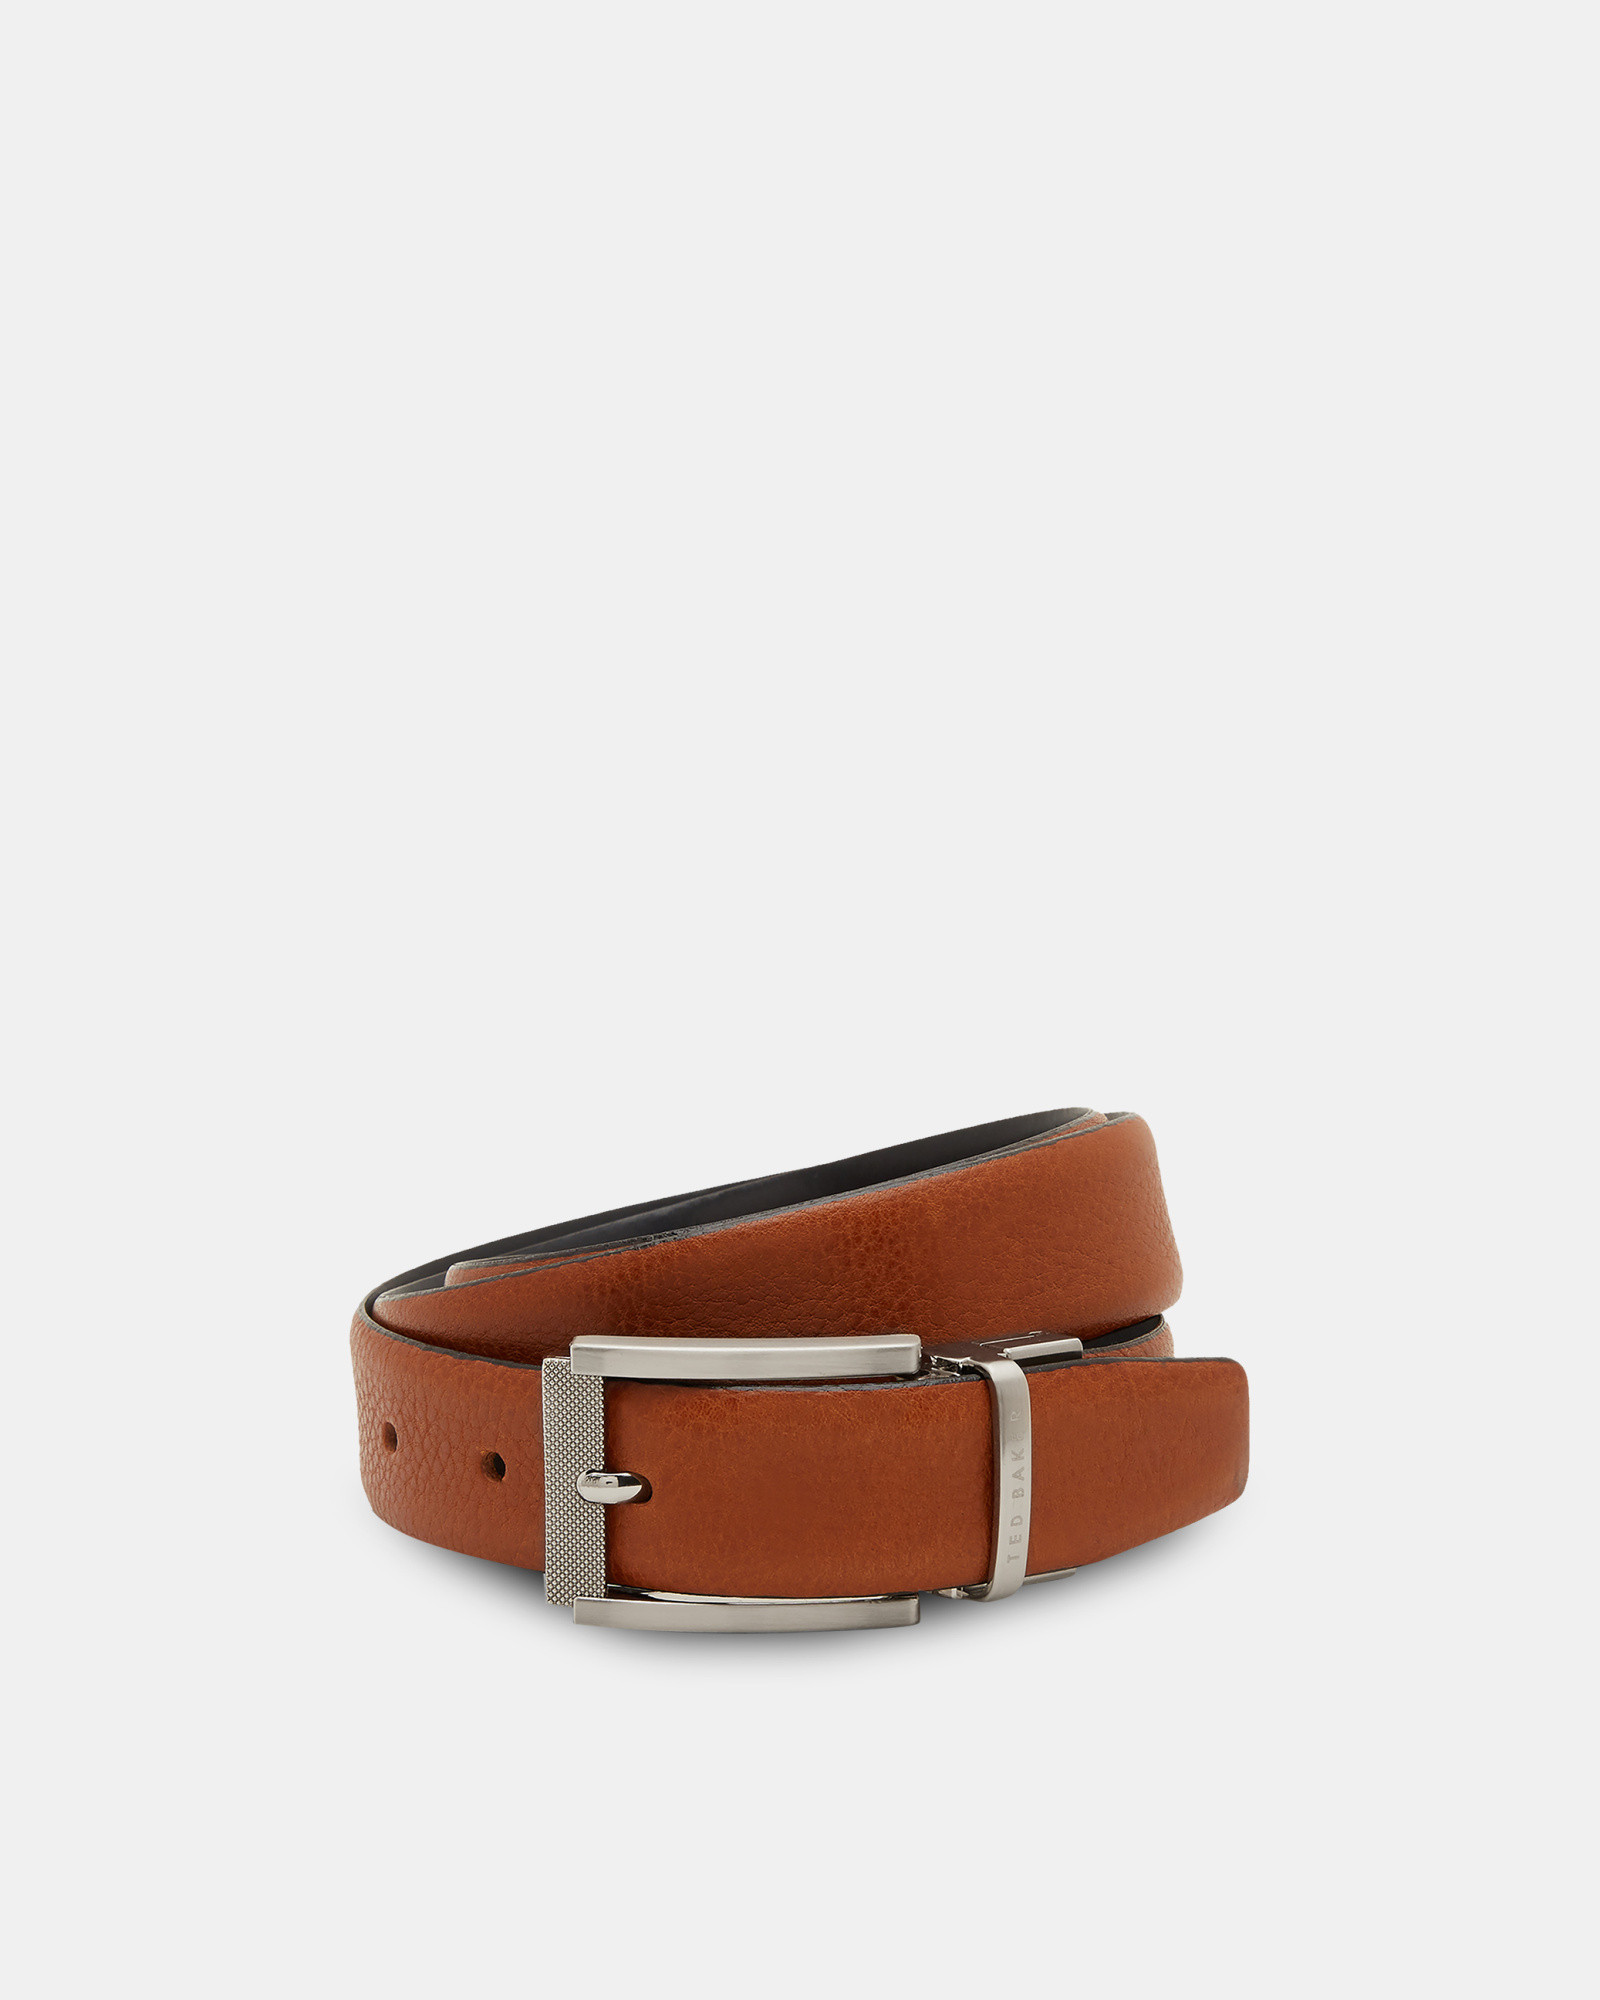 REVA Reversible textured leather belt